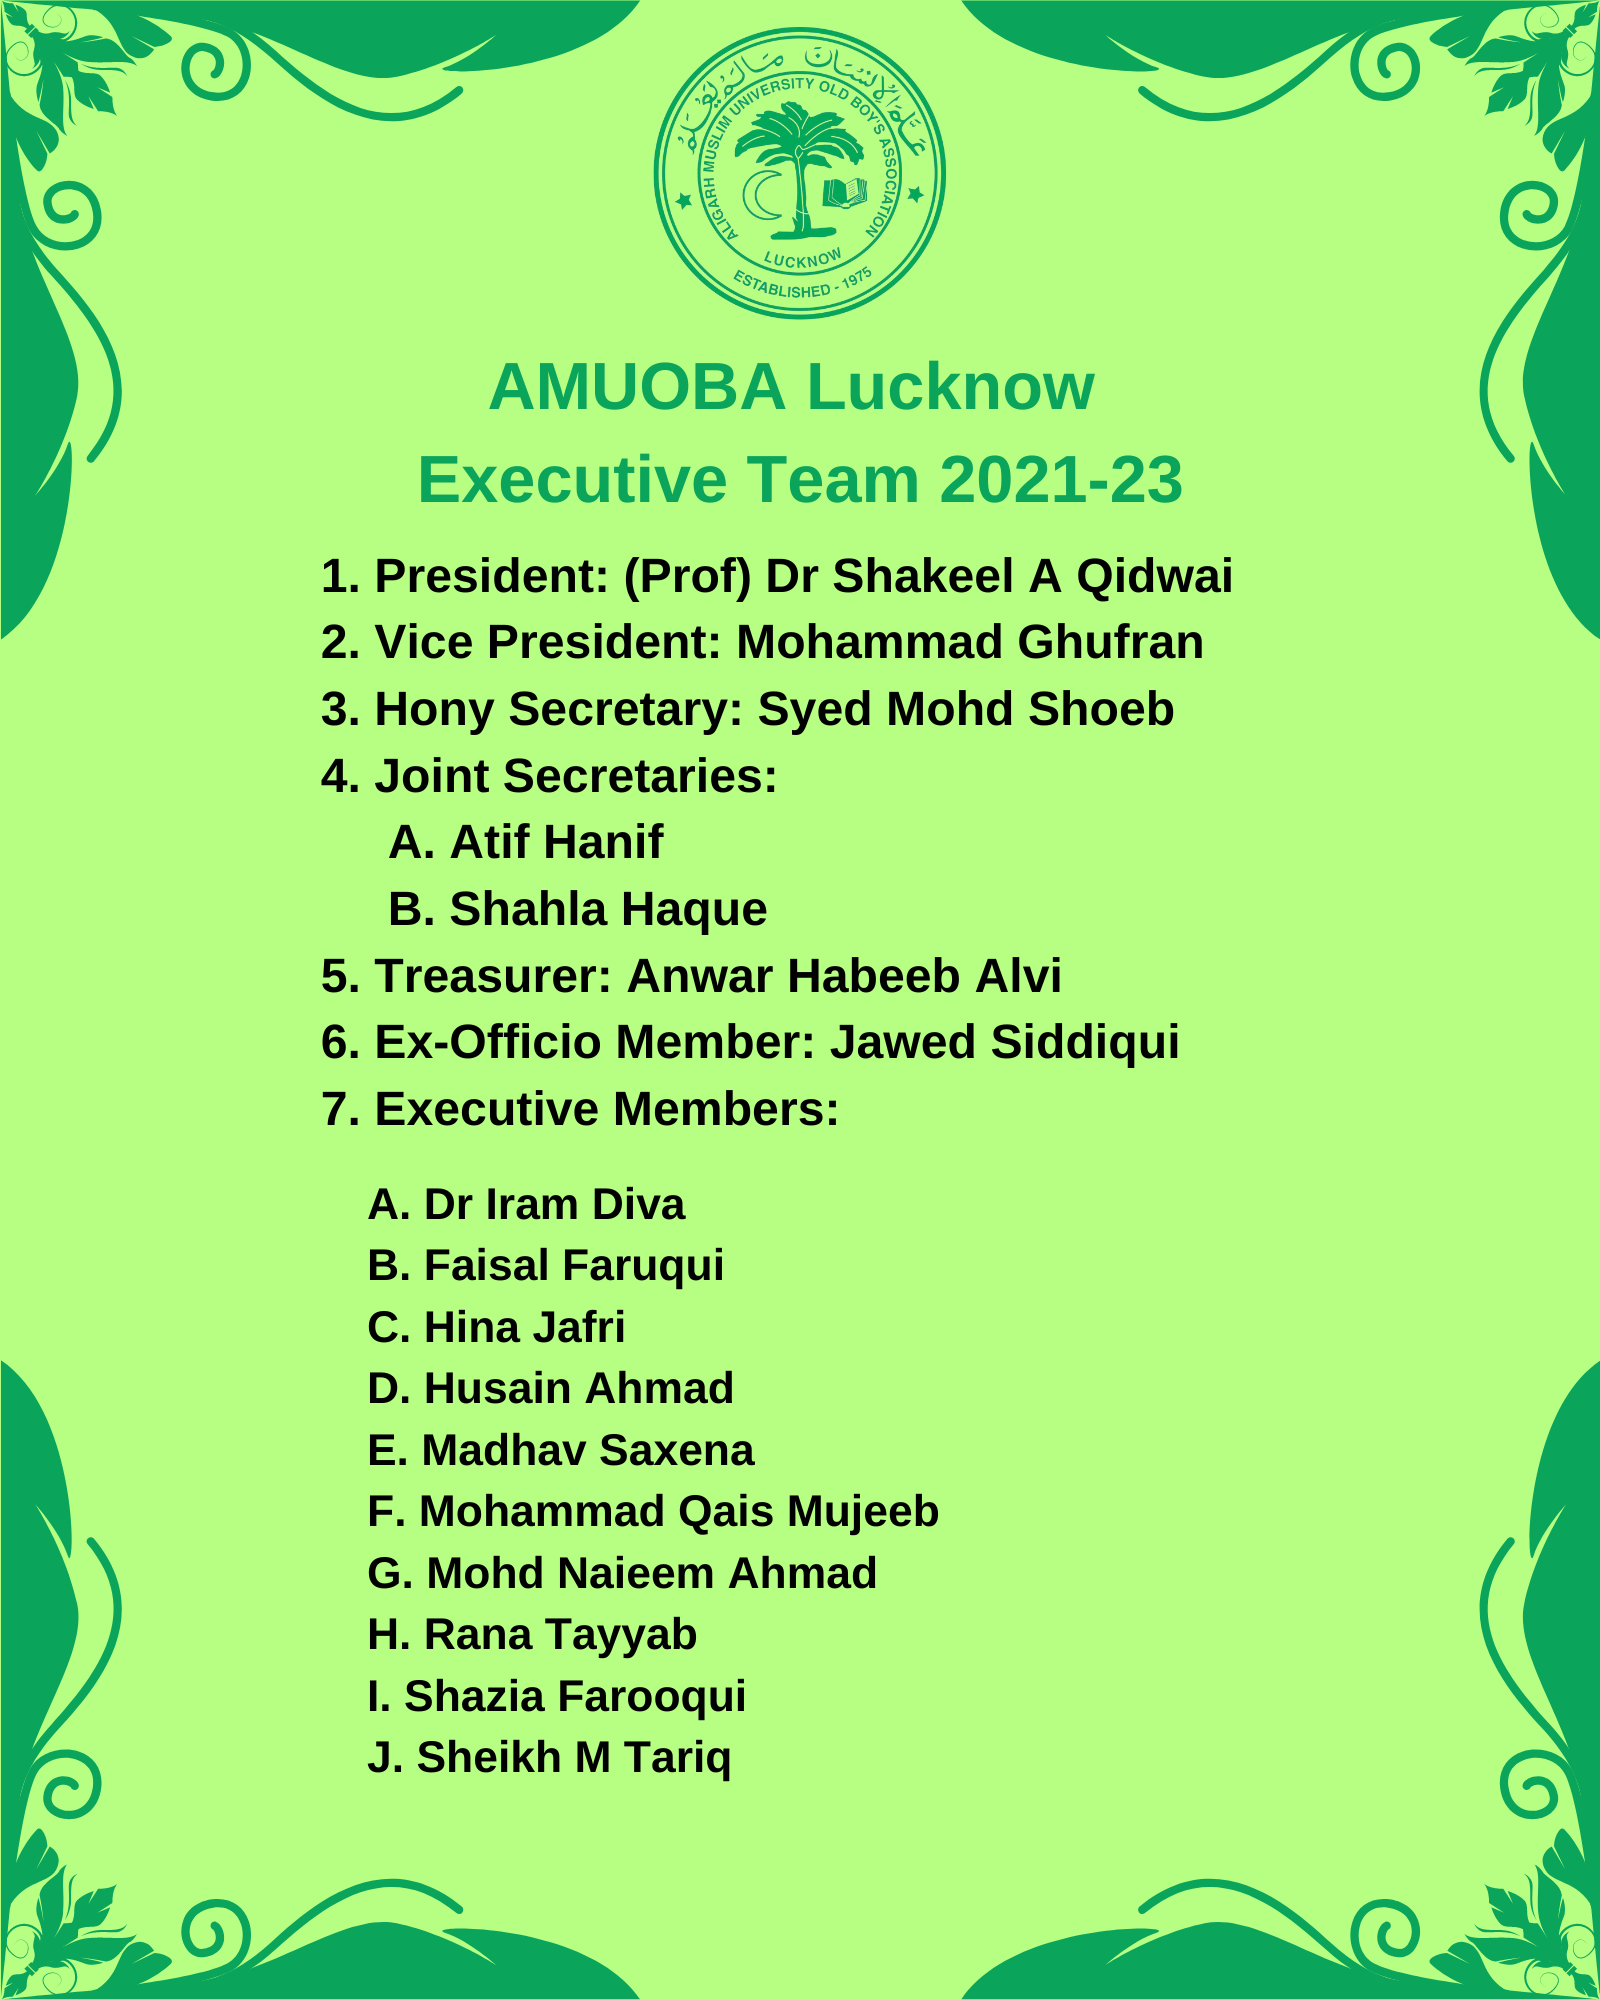 AMUOBA Lucknow Executive Team 2021-23 1. President: (Prof) Dr Shakeel A Qidwai 2. Vice President: Mohammad Ghufran 3. Hony Secretary: Syed Mohd Shoeb 4. Joint Secretaries: A. Atif Hanif B. Shahla Haque 5. Treasurer: Anwar Habeeb Alvi 6. Ex-Officio Member: Jawed Siddiqui 7. Executive Members: A. Dr Iram Diva B. Faisal Faruqui C. Hina Jafri D. Husain Ahmad E. Madhav Saxena F. Mohammad Qais Mujeeb G. Mohd Naieem Ahmad H. Rana Tayyab I. Shazia Farooqui J. Sheikh M Tariq